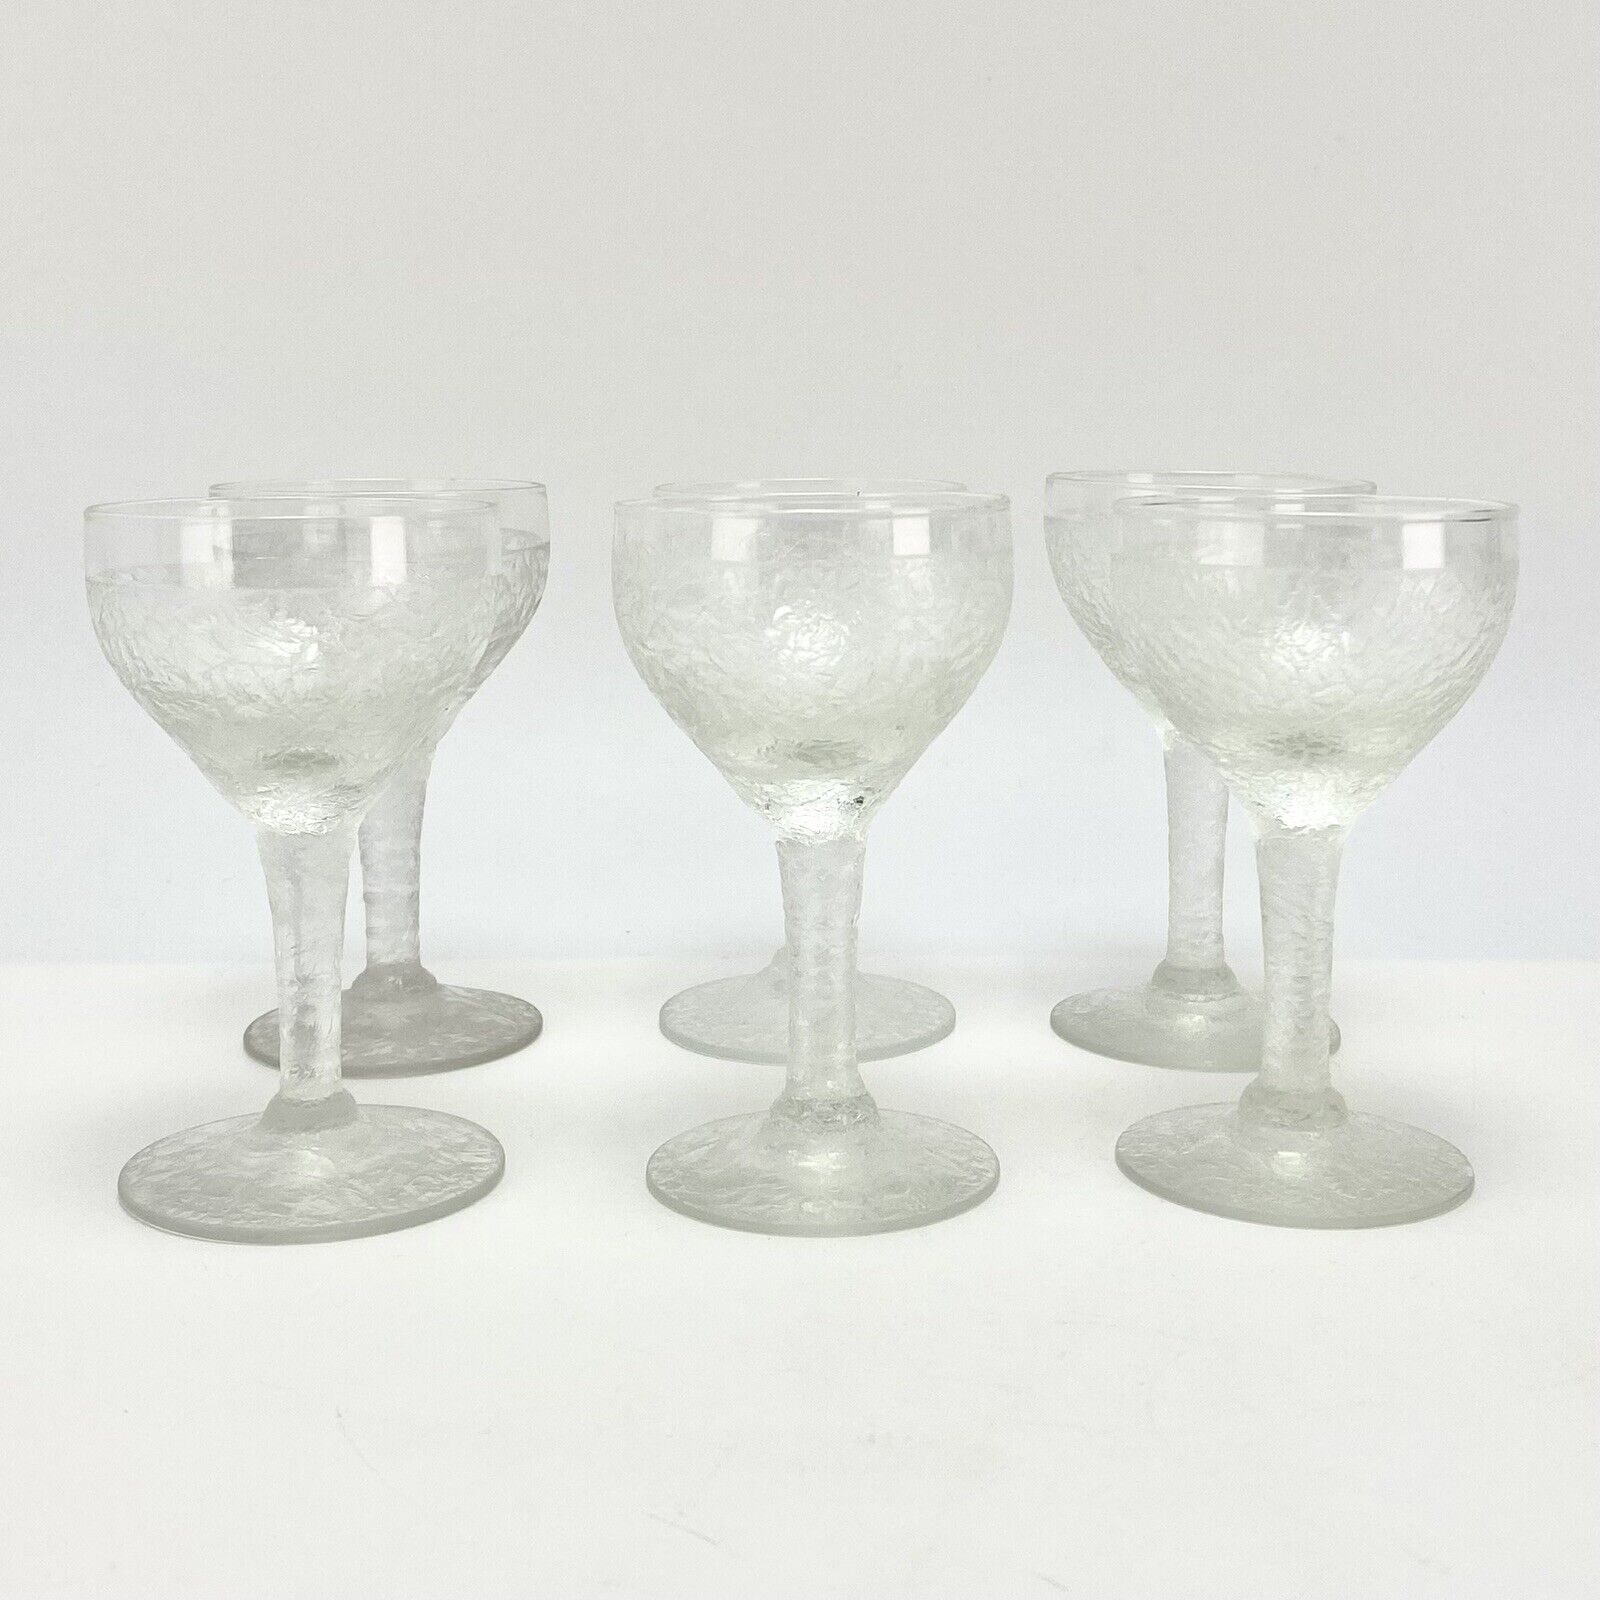 6 Vtg Art Deco 1930s Cocktail Glasses Ice Crystal Isblomst Design Jacob E Bang